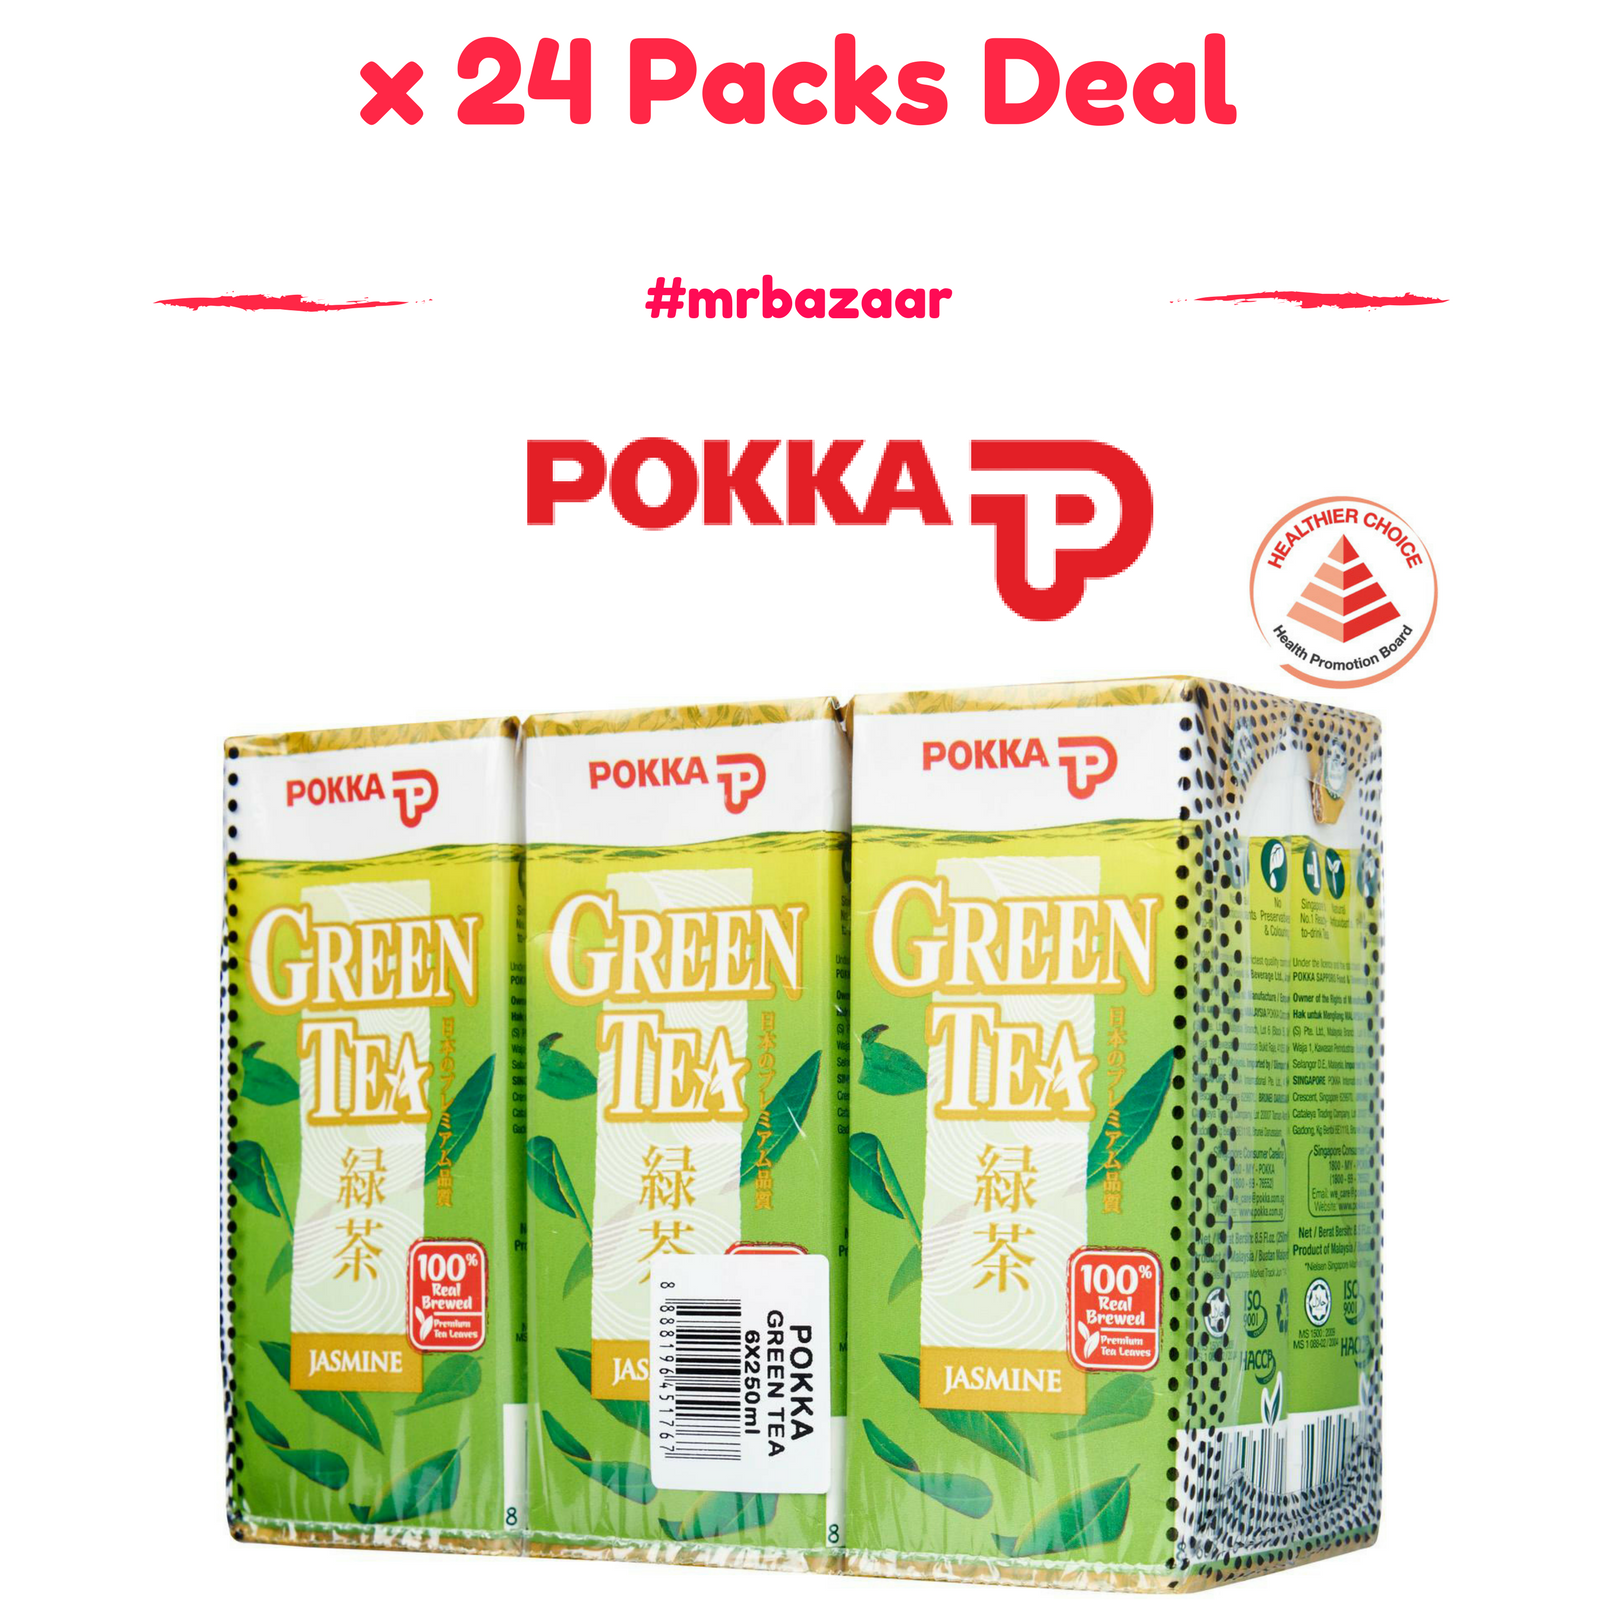 Pokka Jasmine Green Tea Packet x 24 Packs Carton Deal (250 ml)